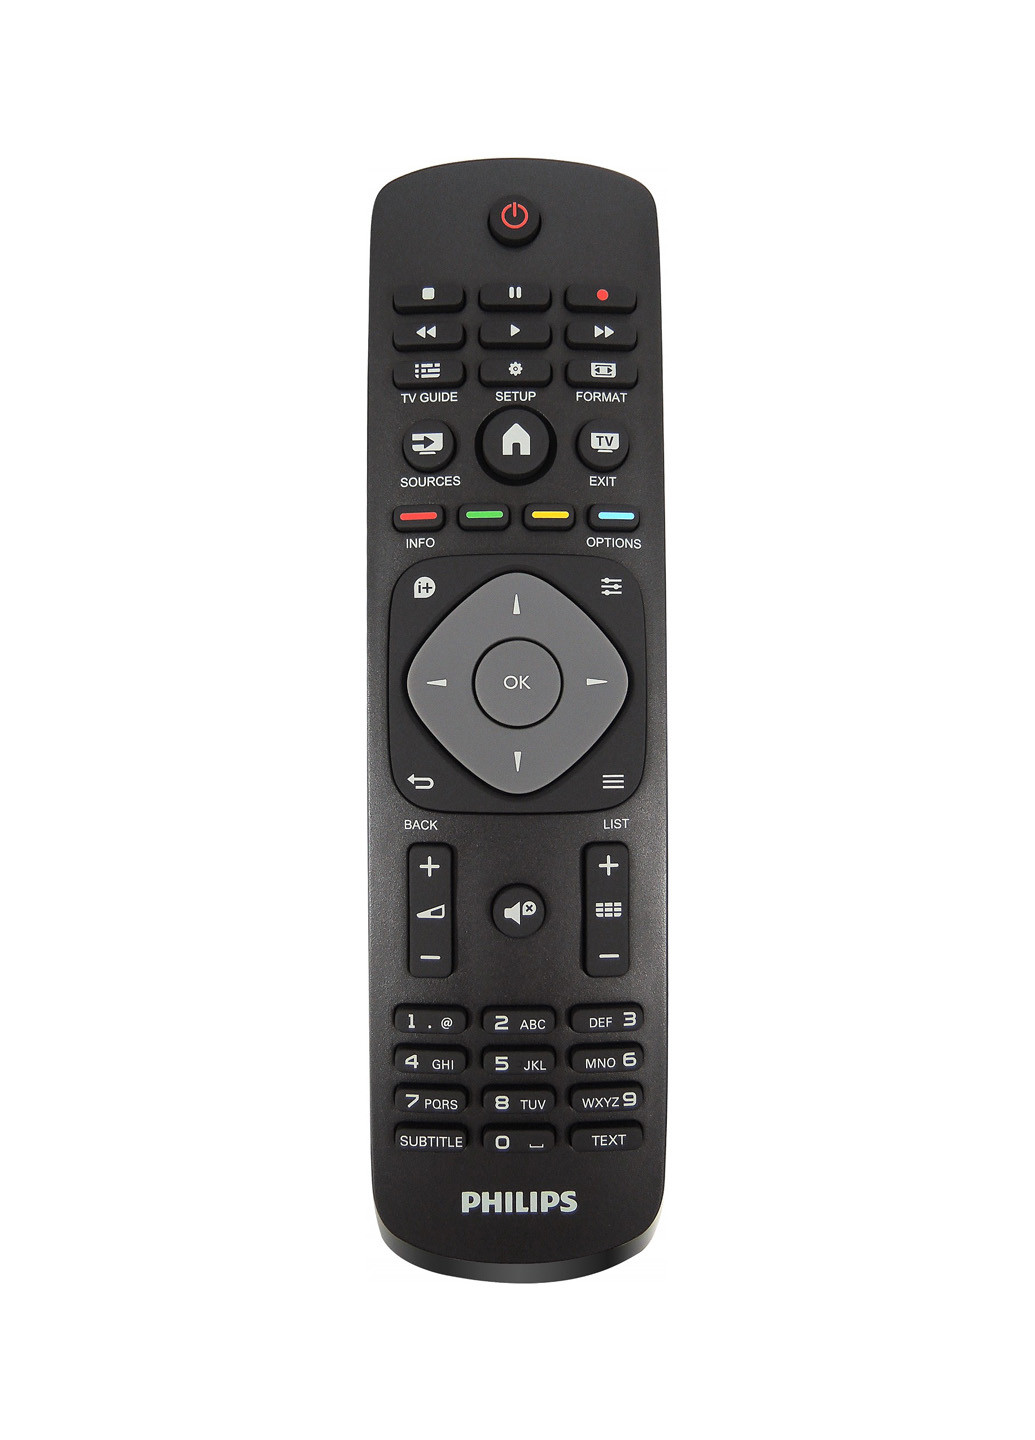 Телевизор Philips 43pft4203/12 (131092020)